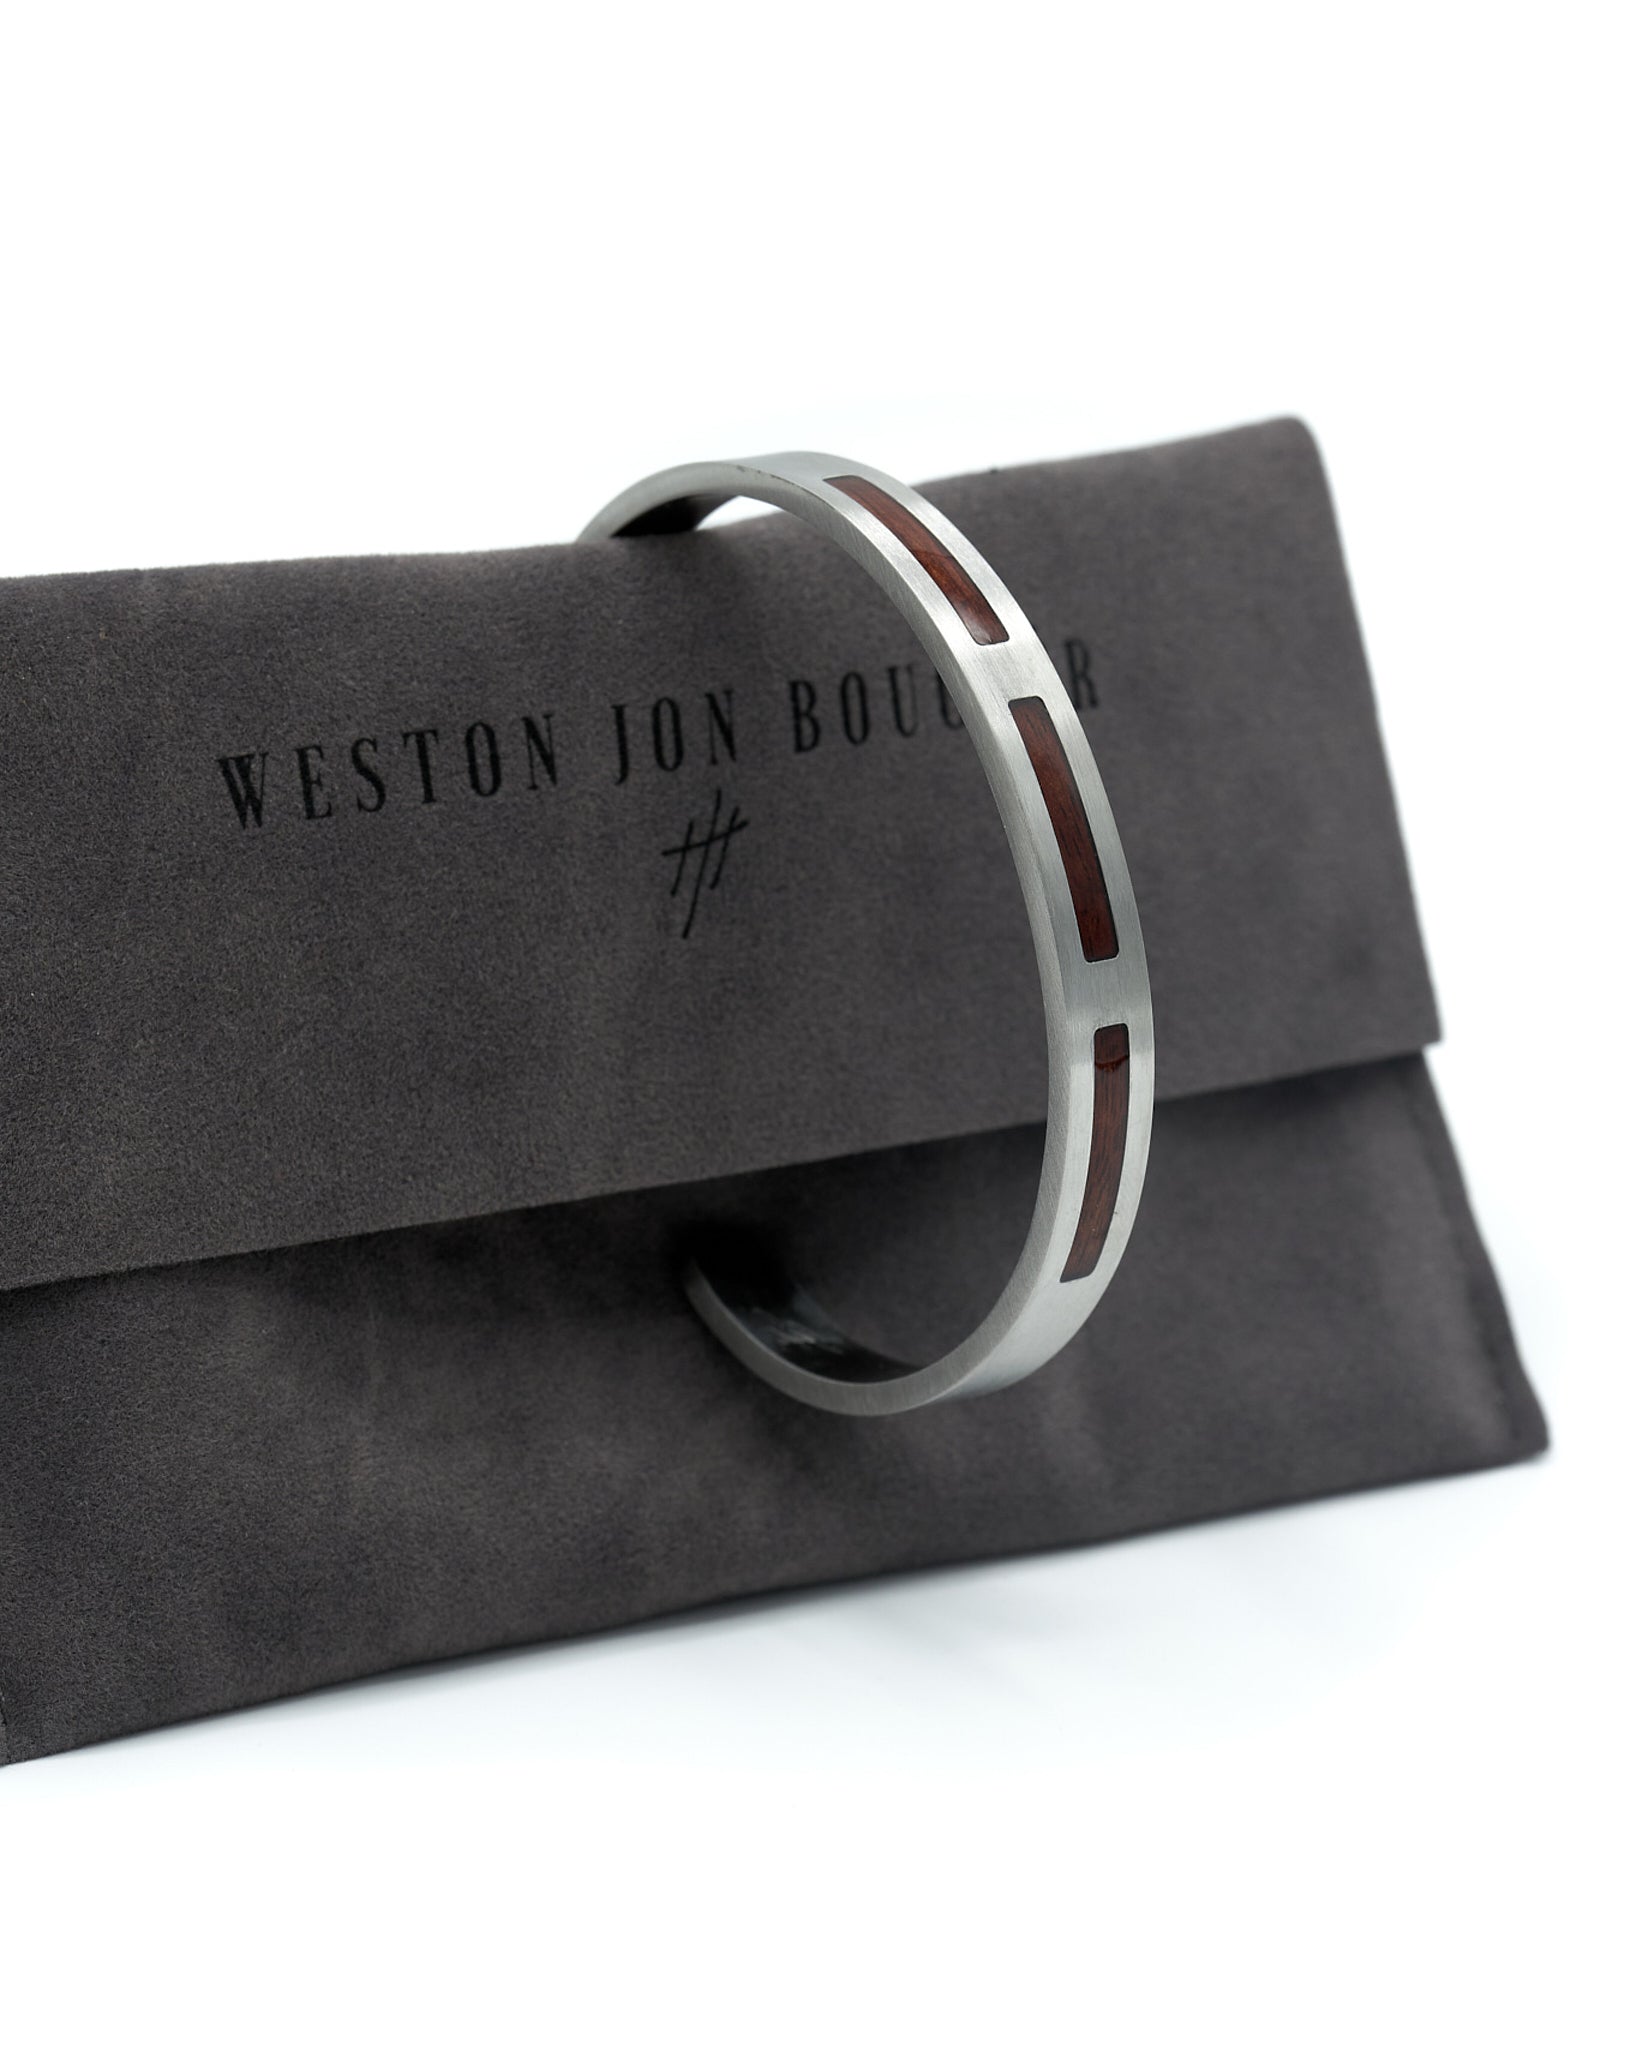 The Gentleman's Cuff [Large] - WESTON JON BOUCHÉR